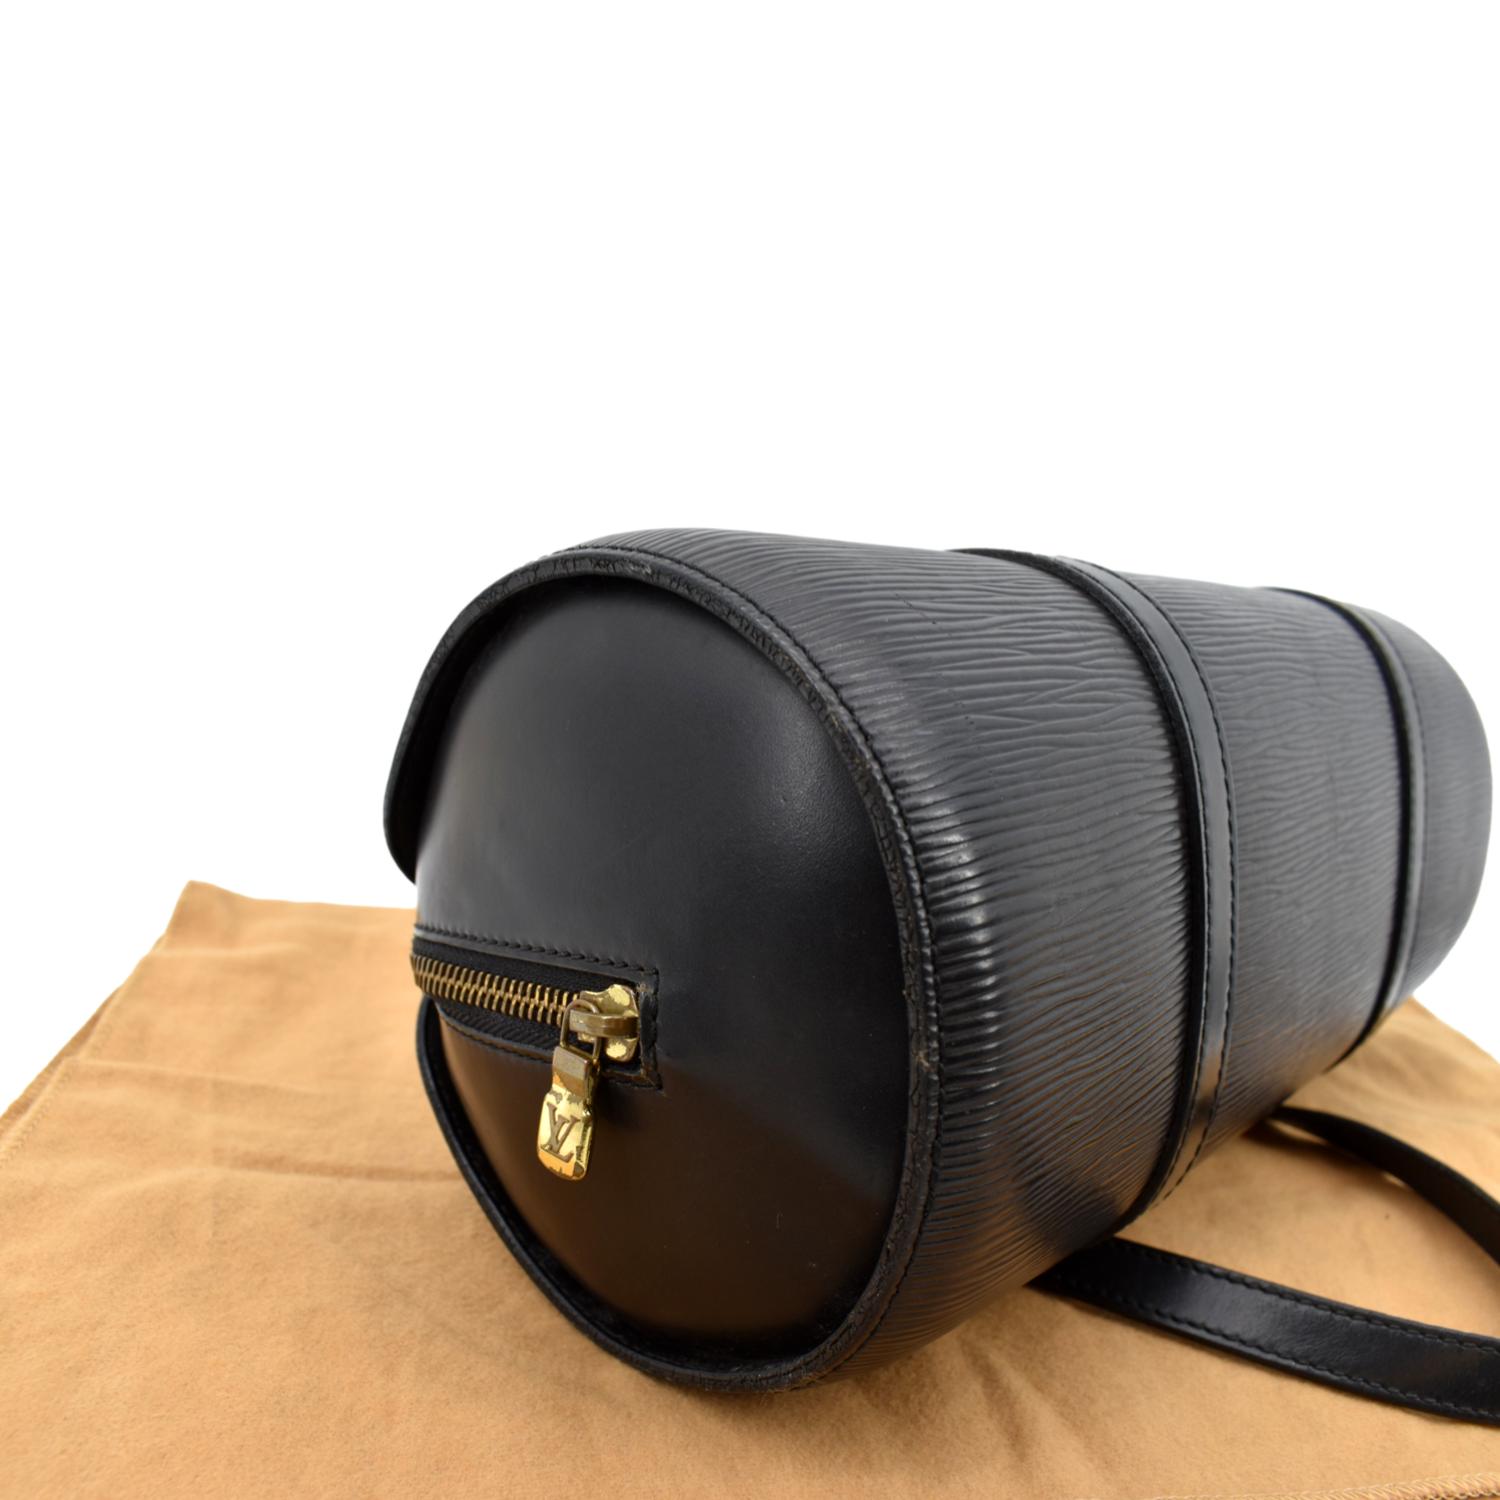 Louis Vuitton Soufflot handbag in black epi leather